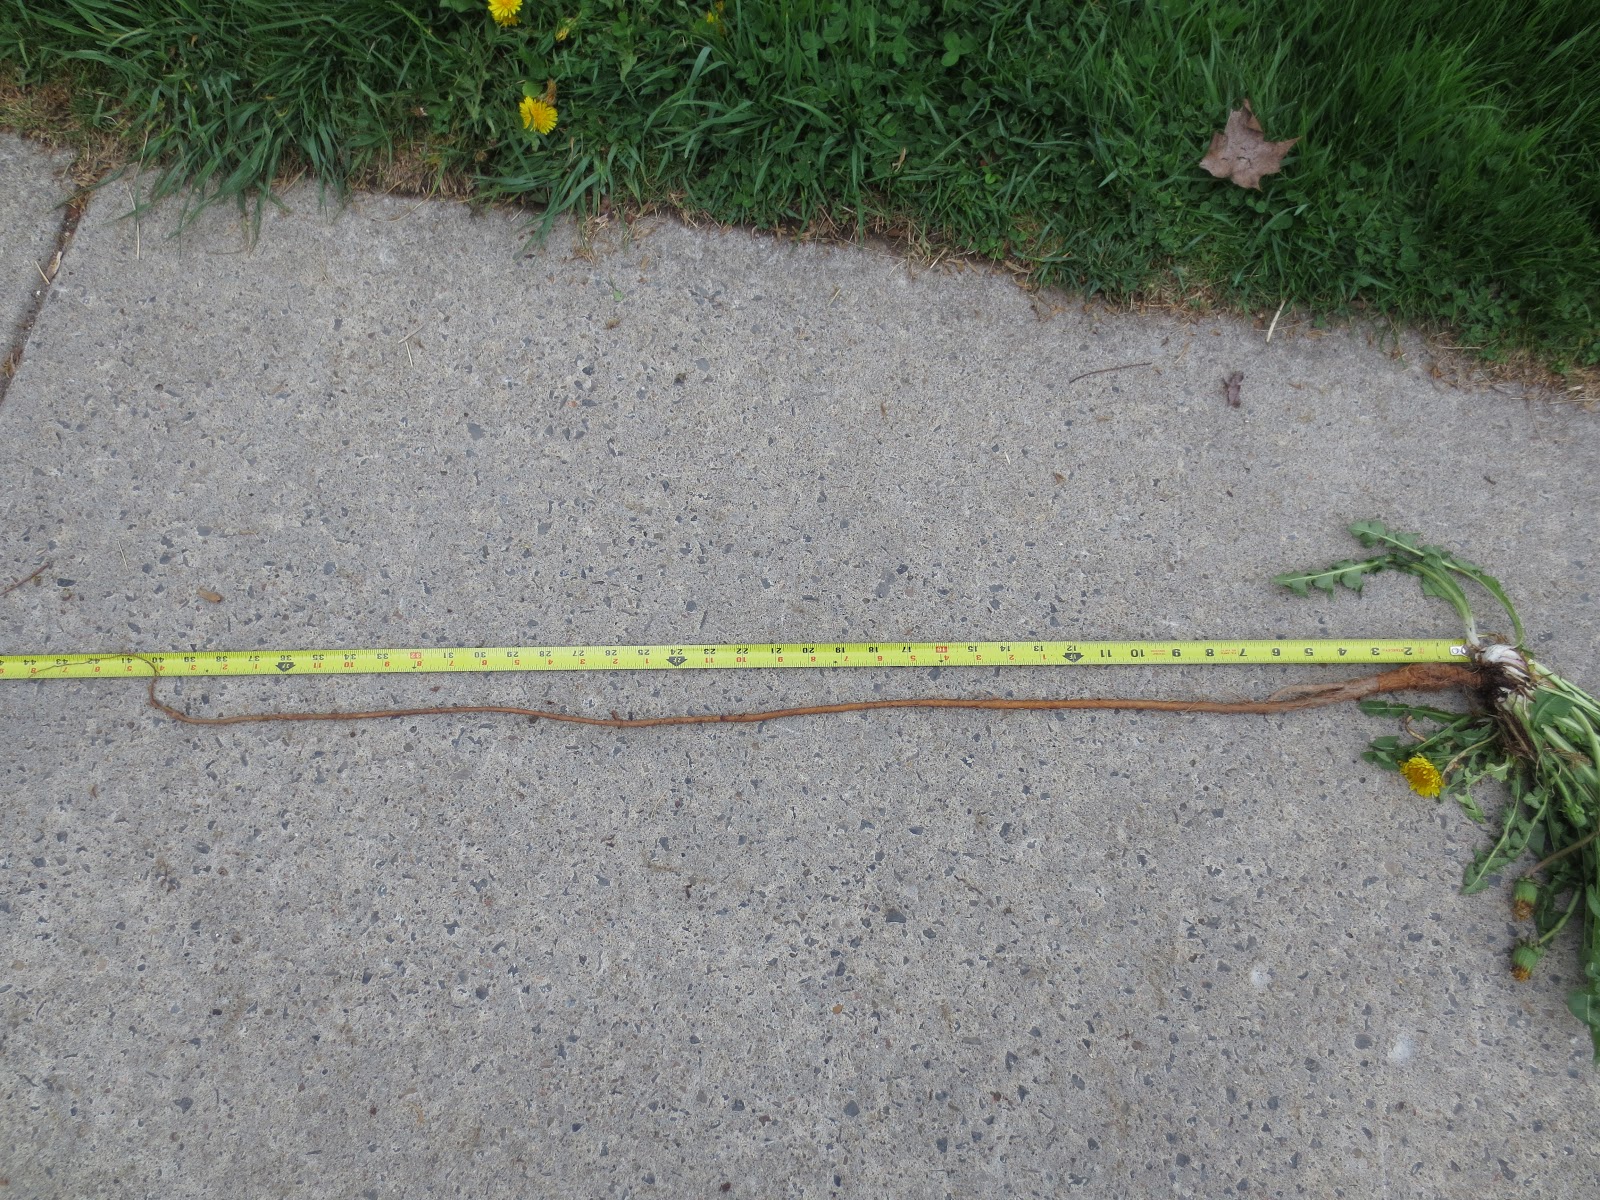 Backyard Organic Gardener: Now That's What I Call A Dandelion Root